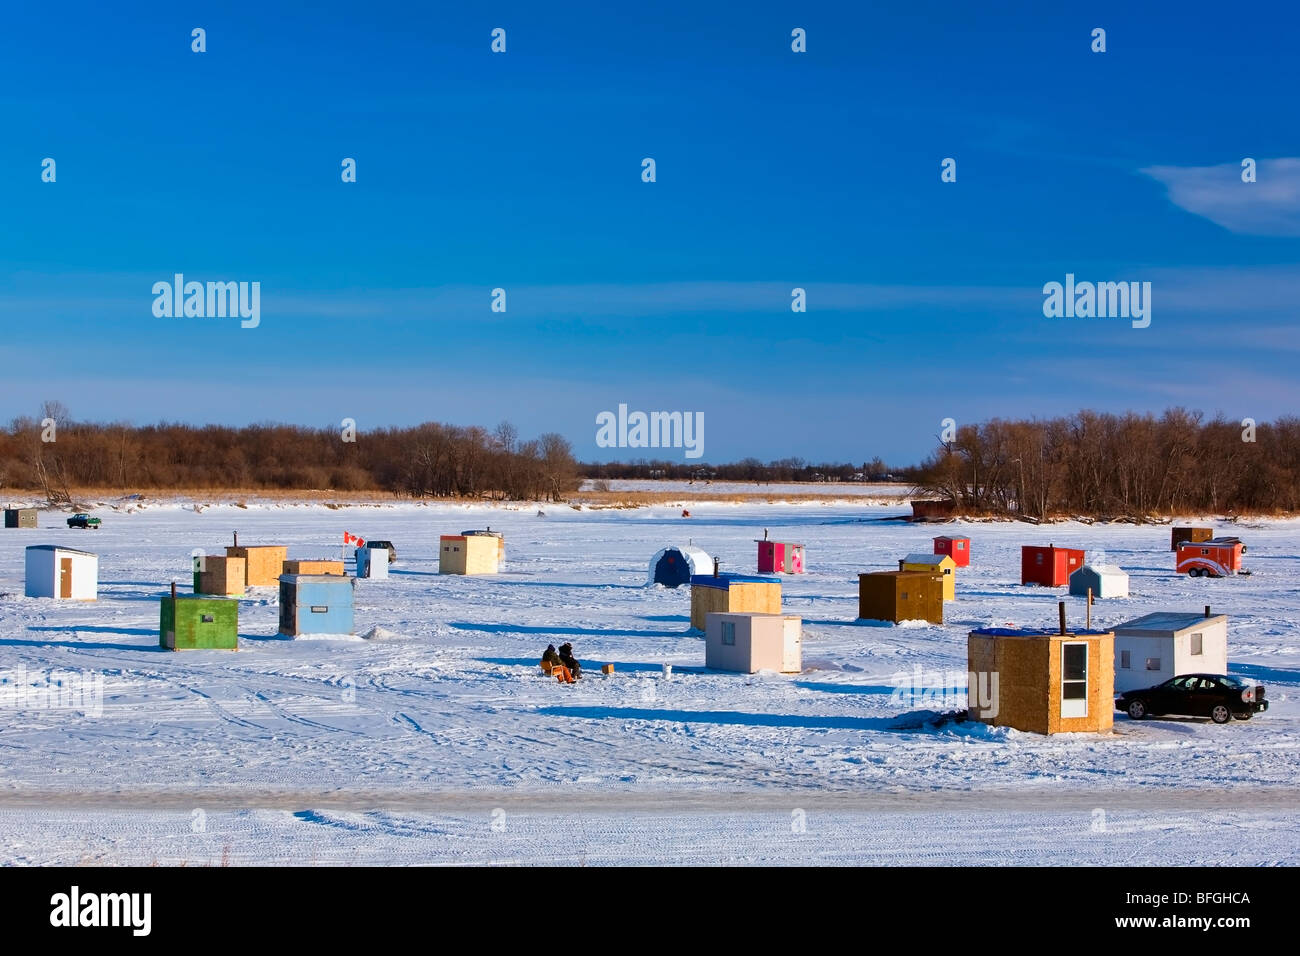 Ice fishing shacks on the Red River, Selkirk, Winnipeg, Manitoba